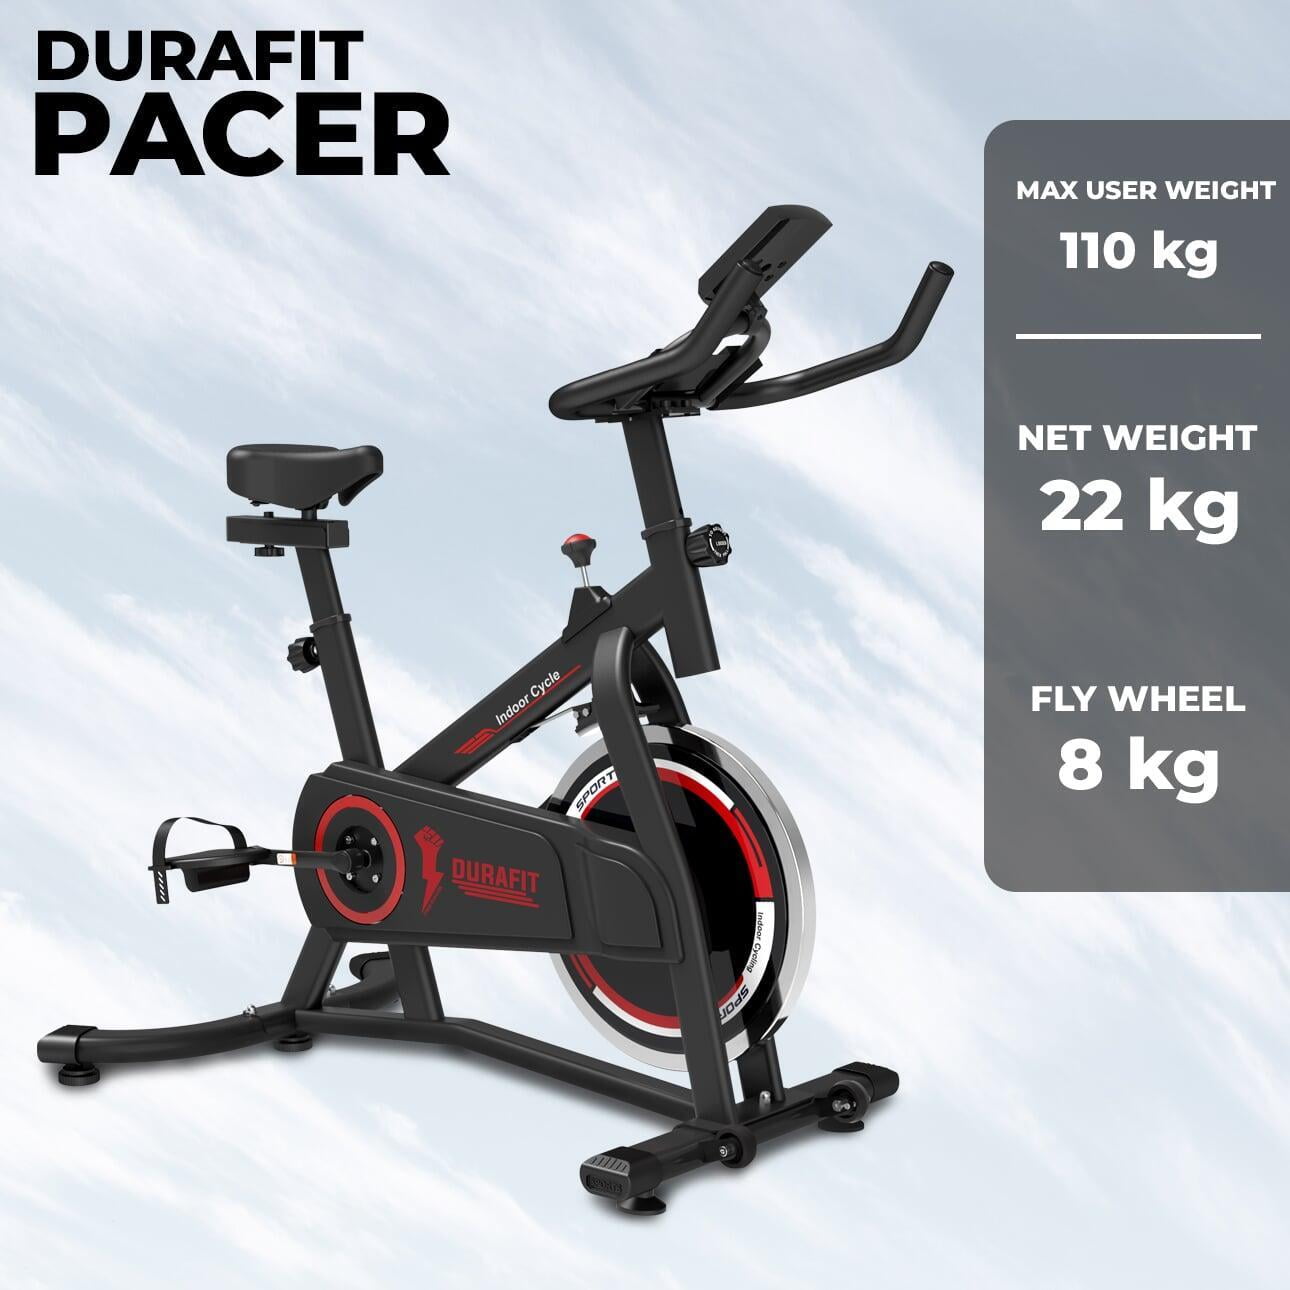 Durafit Pacer Max User weight 110kg